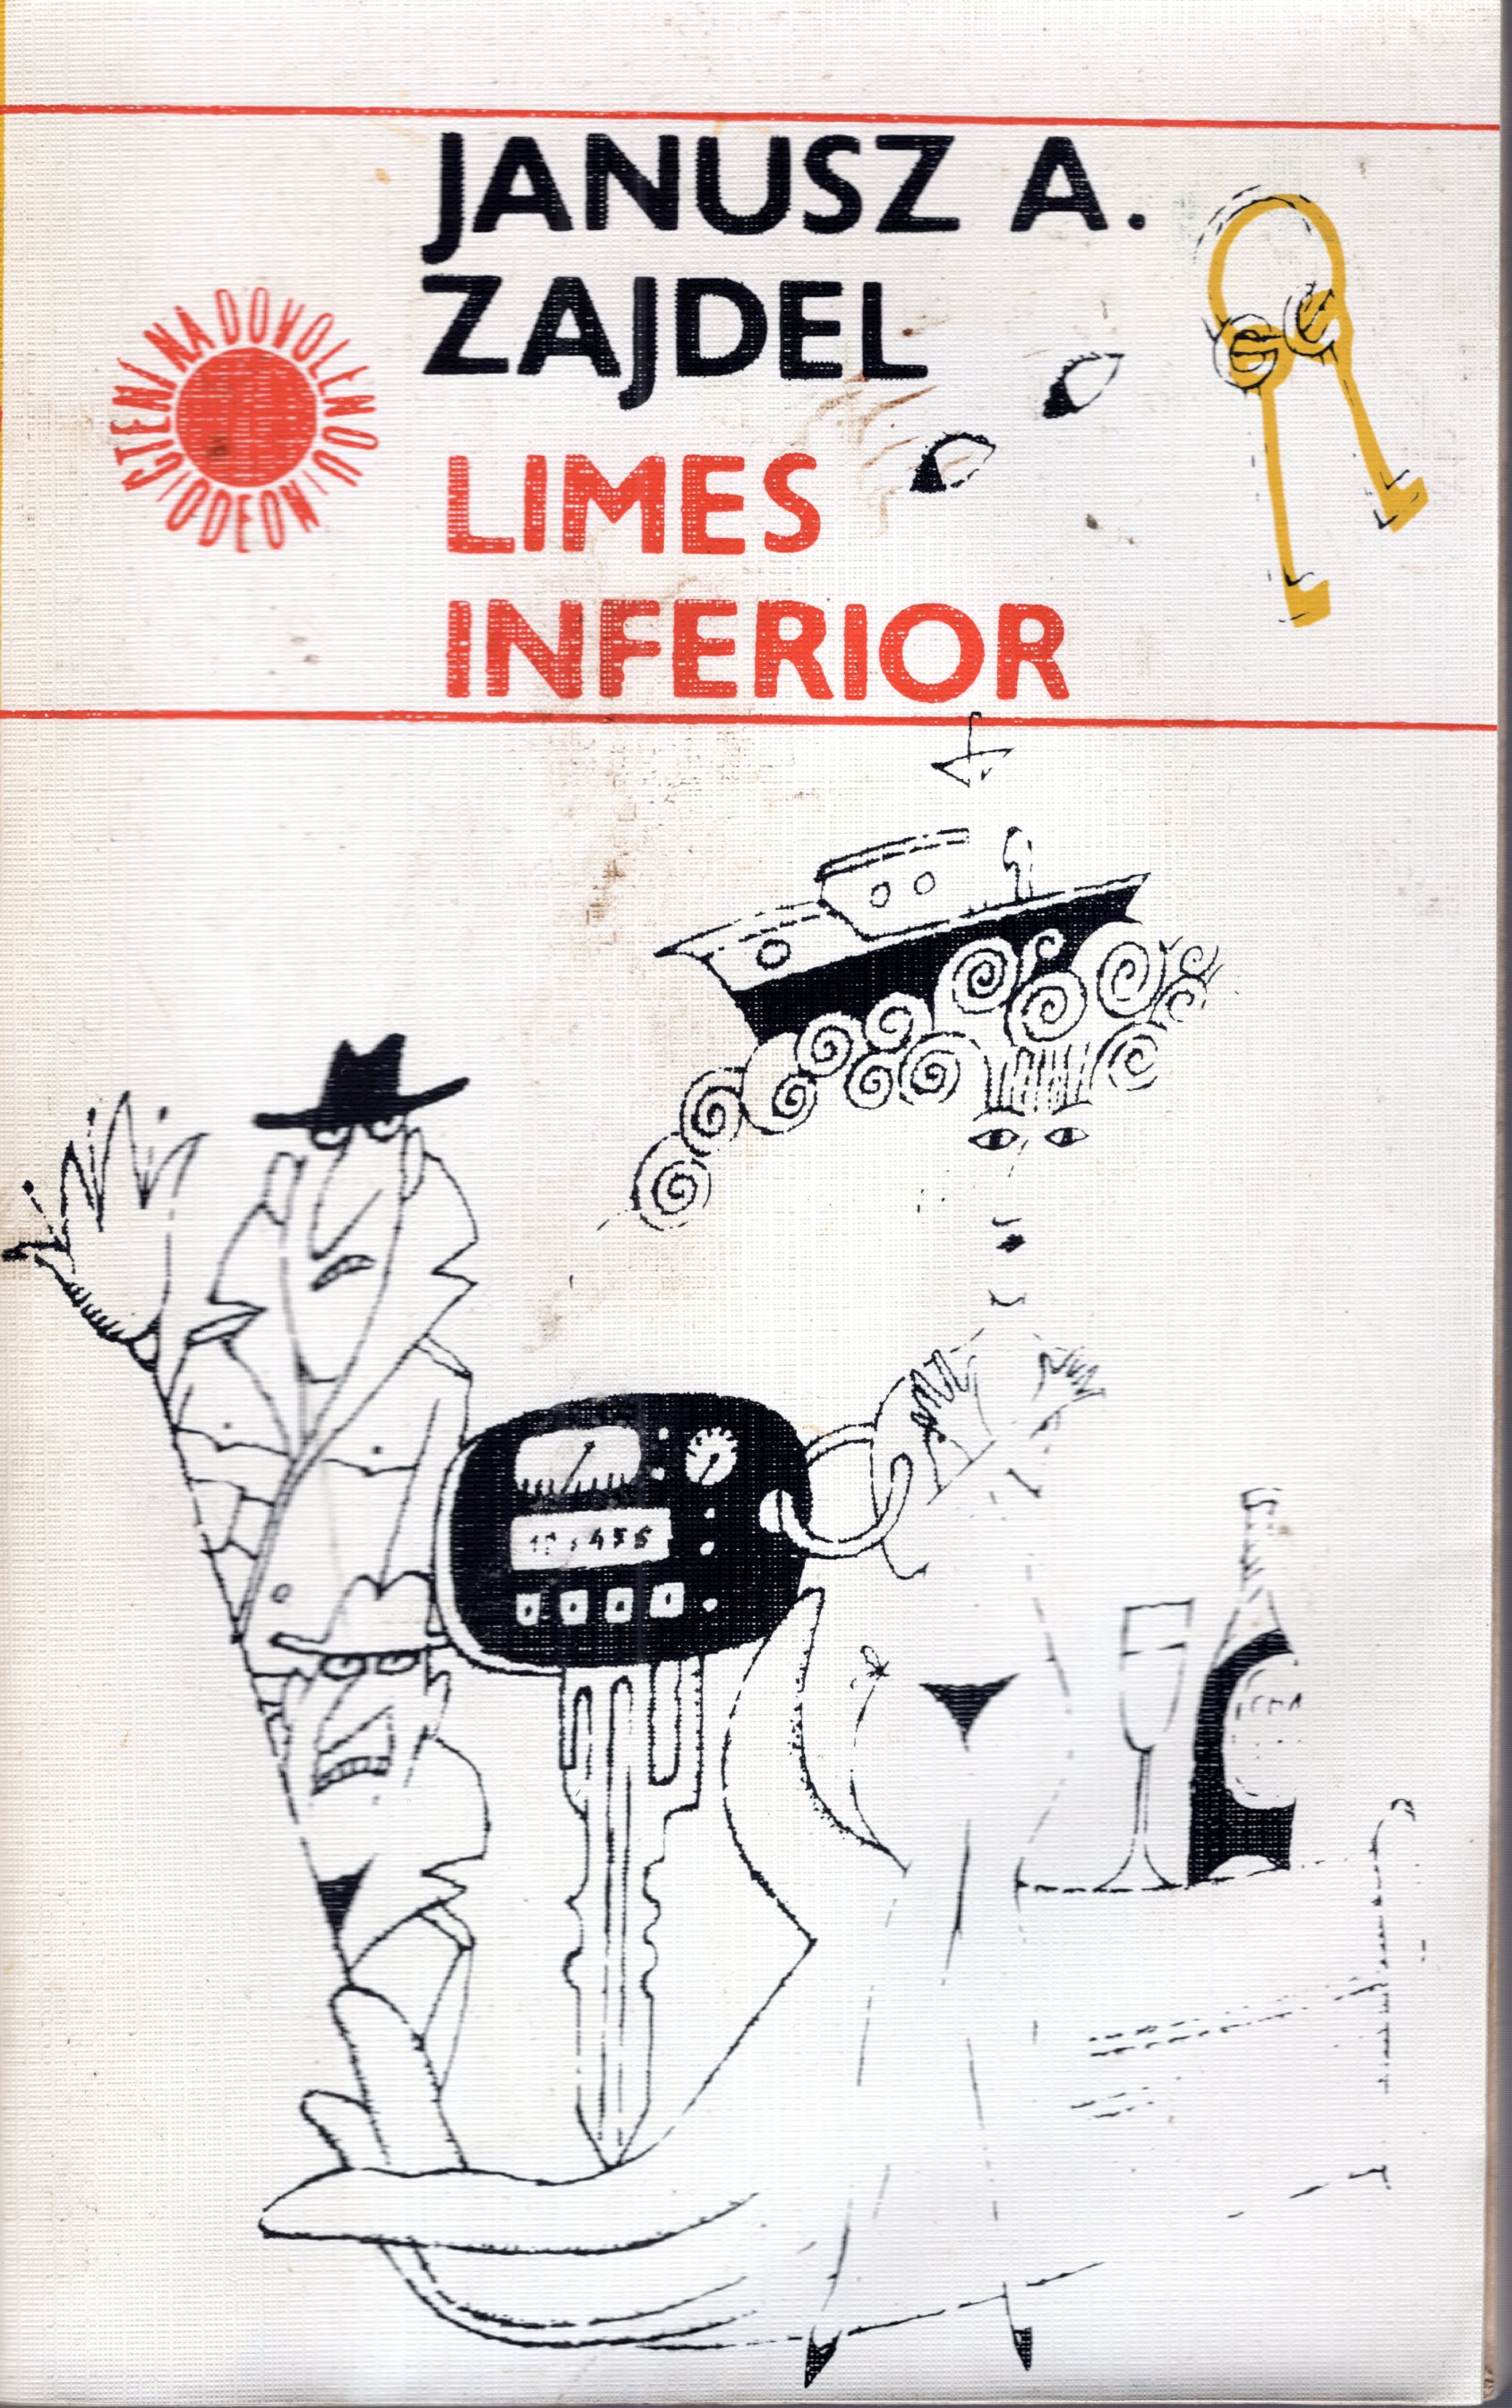 A - Limes inferior [Zajdel Janusz A.]